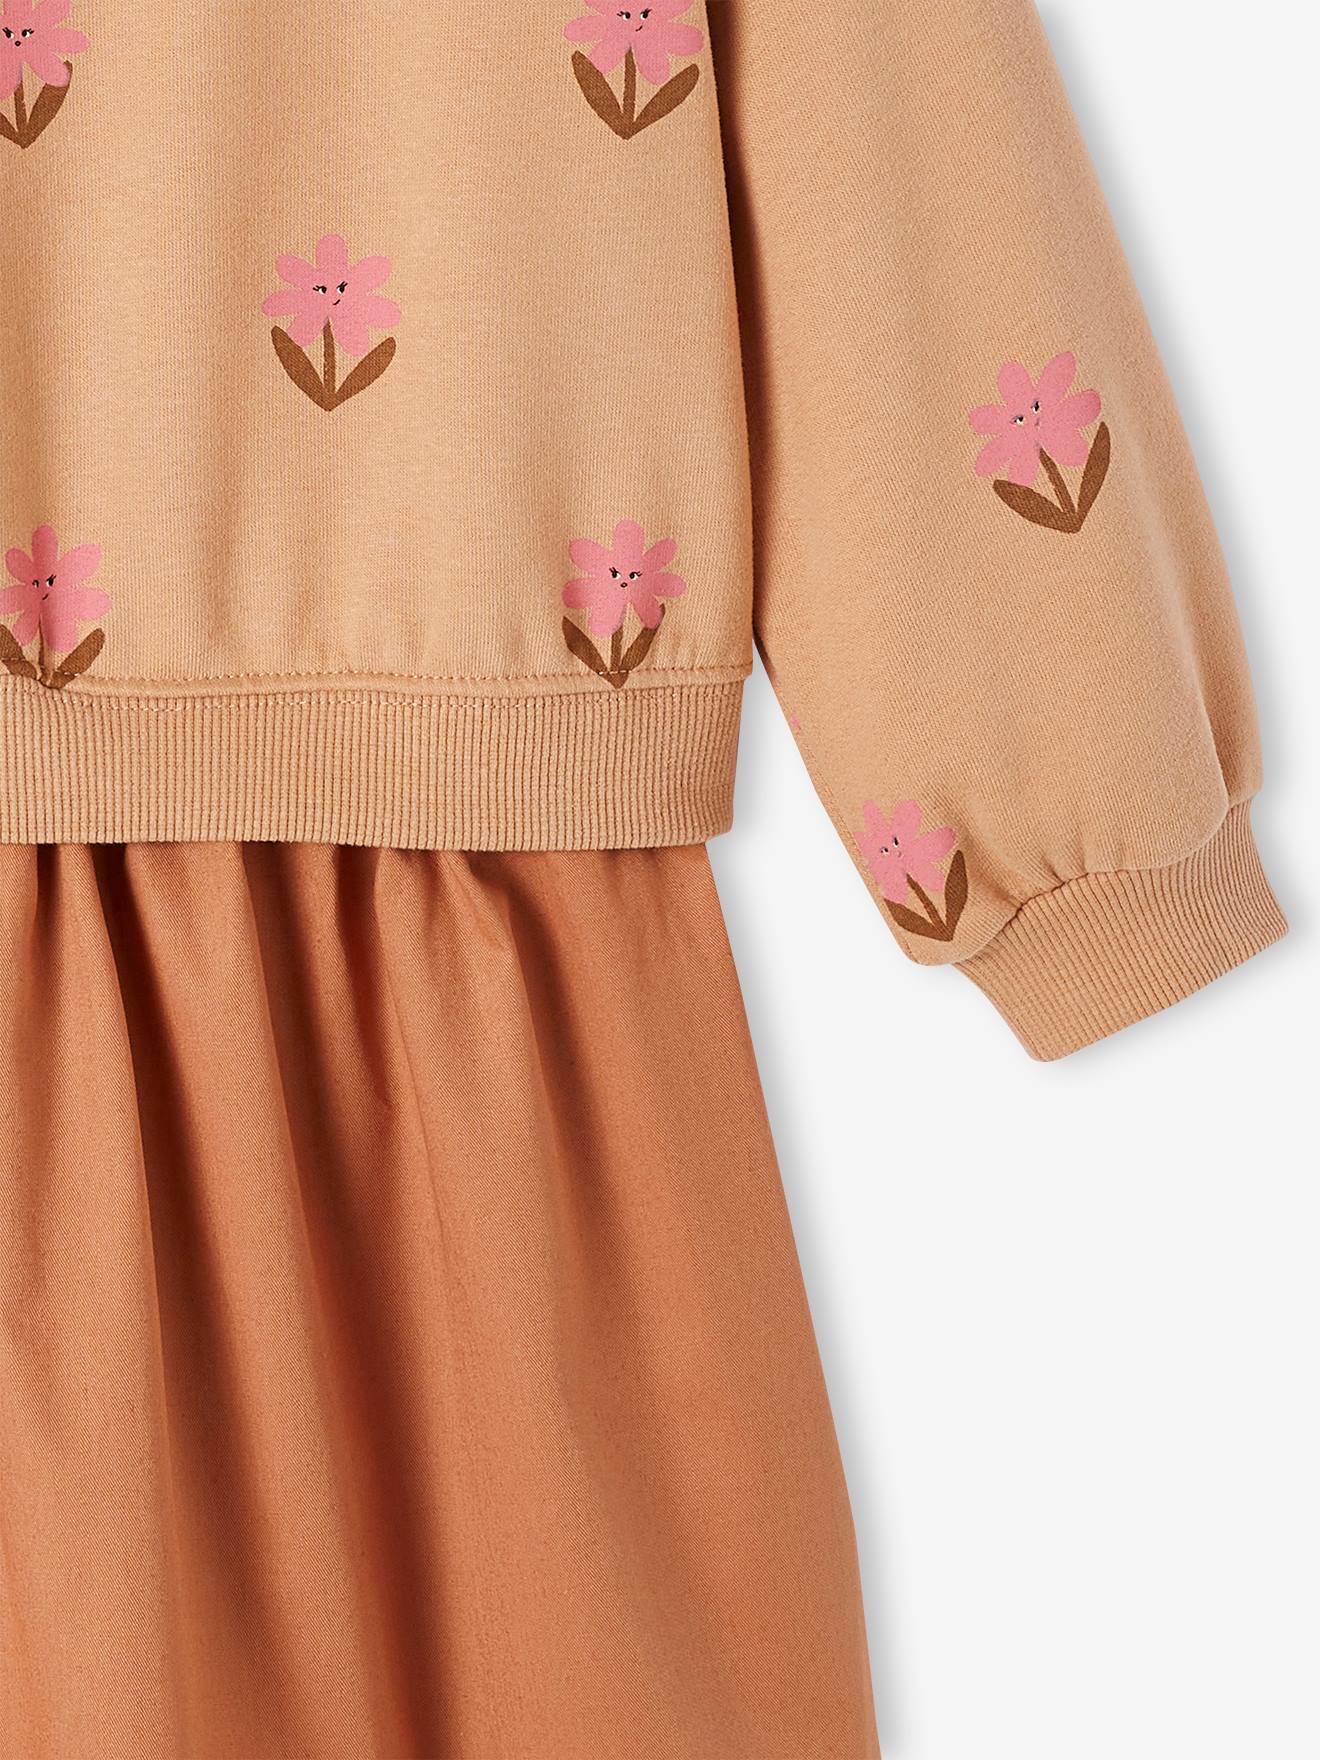 2-in-1 Effect Dress with Pop Flower Motifs for Girls - peach